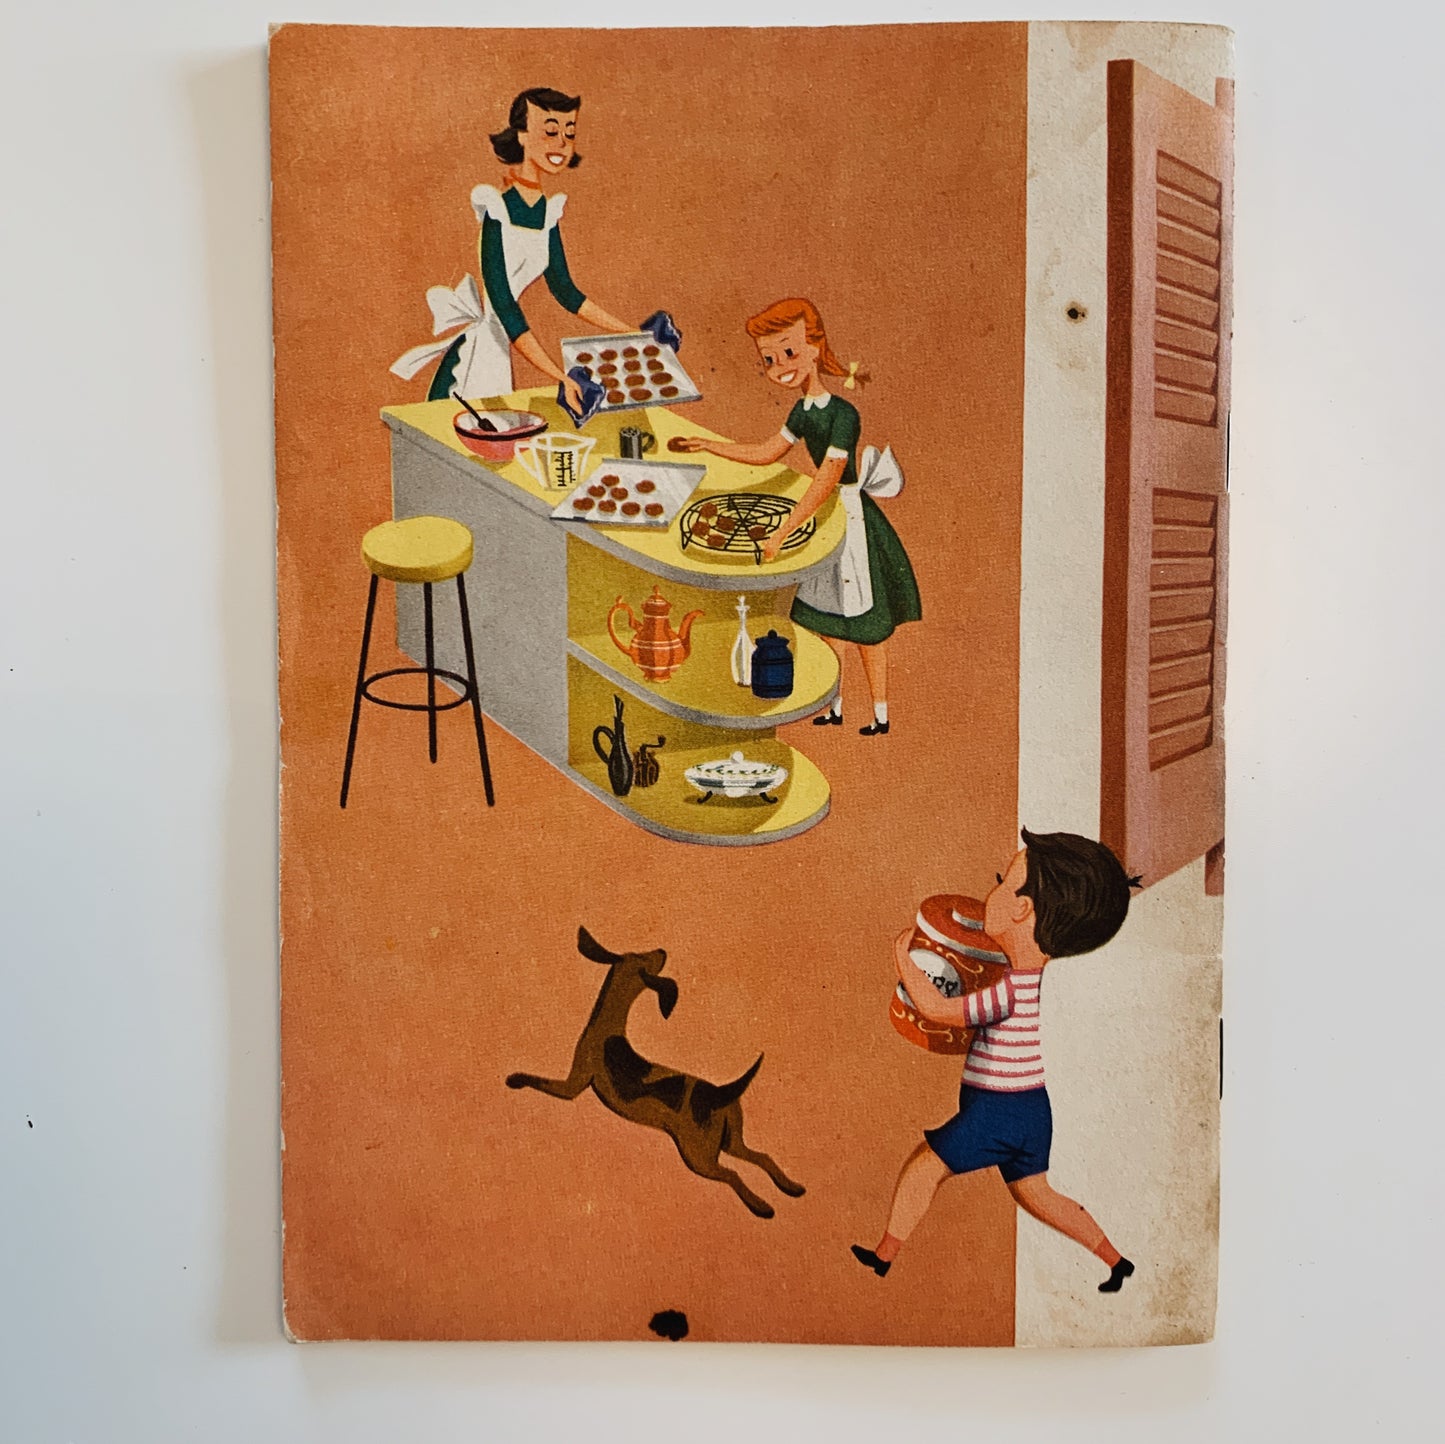 Cookies Galore, 1956, Paperback Mini Book from General Mills